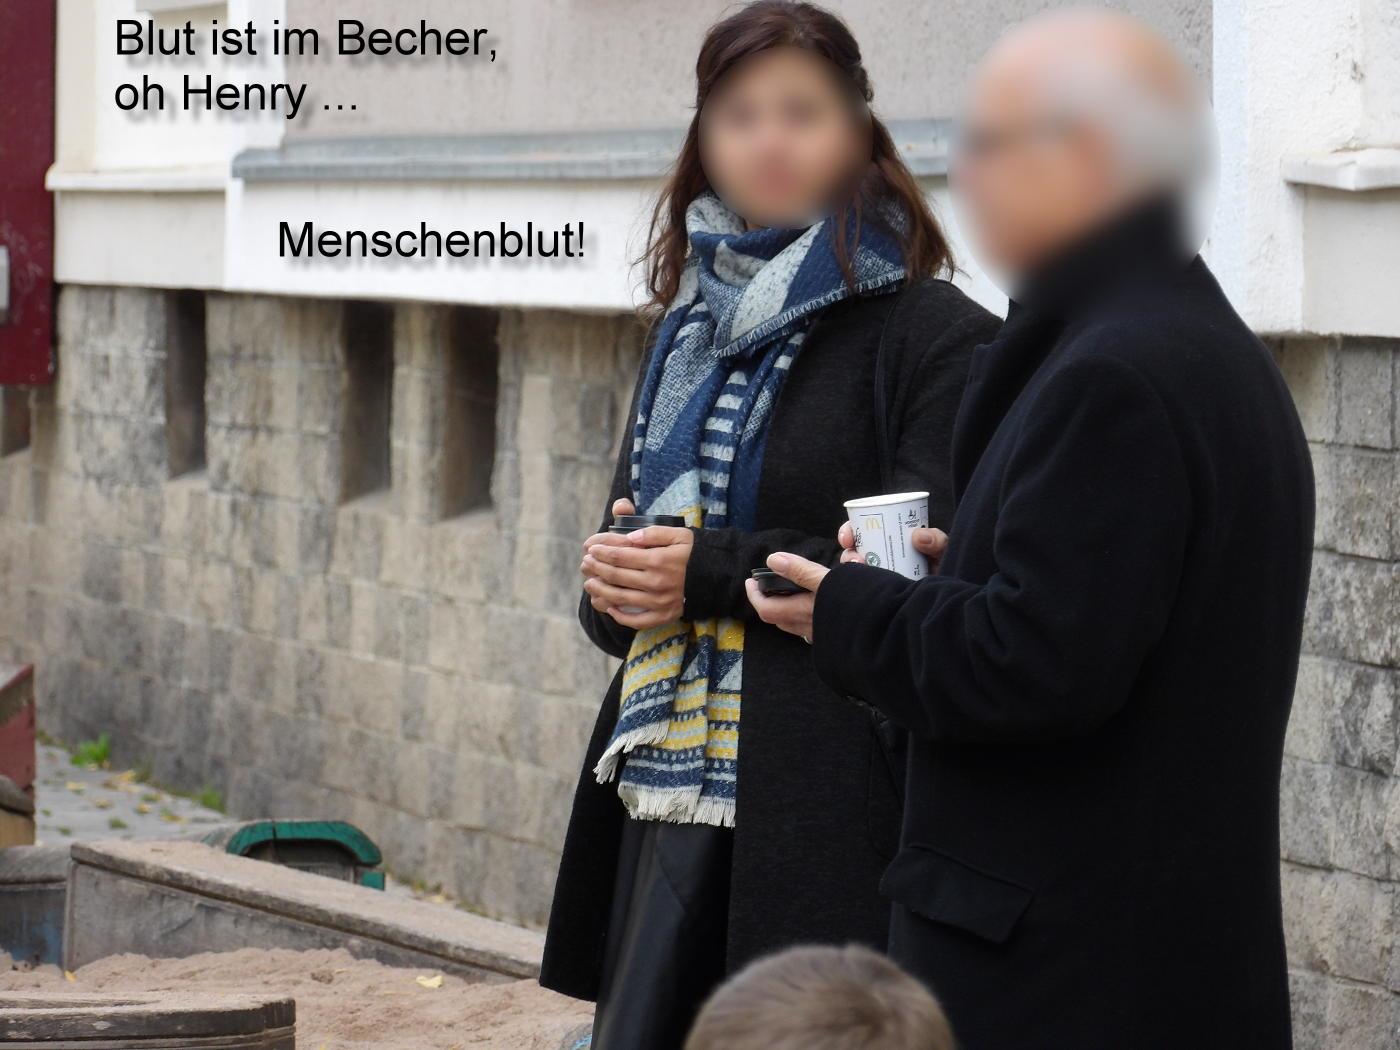 Heilbronn: Jehovah's Witnesses' major repair campaign